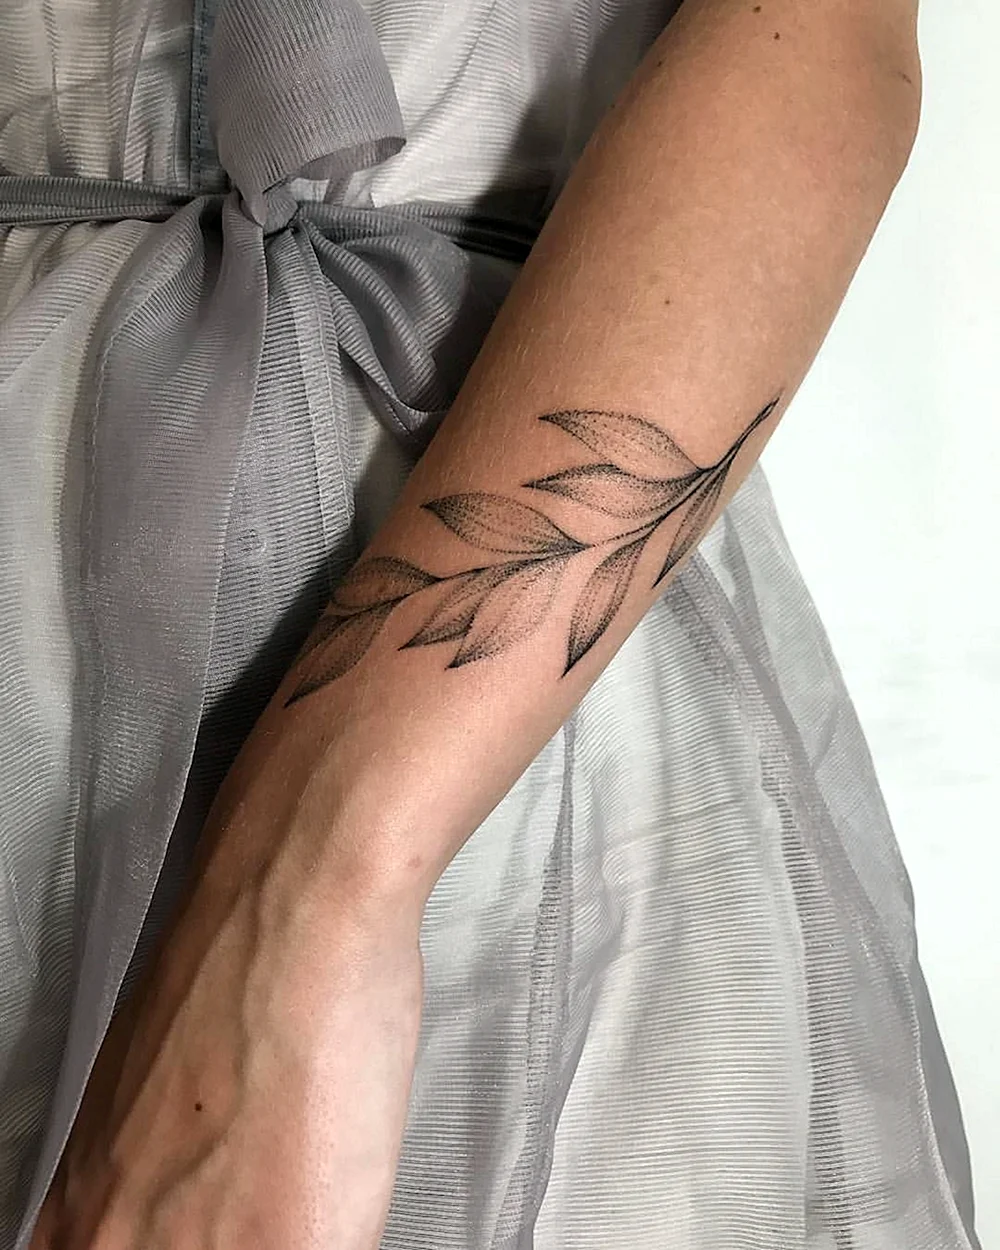 Leafy Armband Tattoos